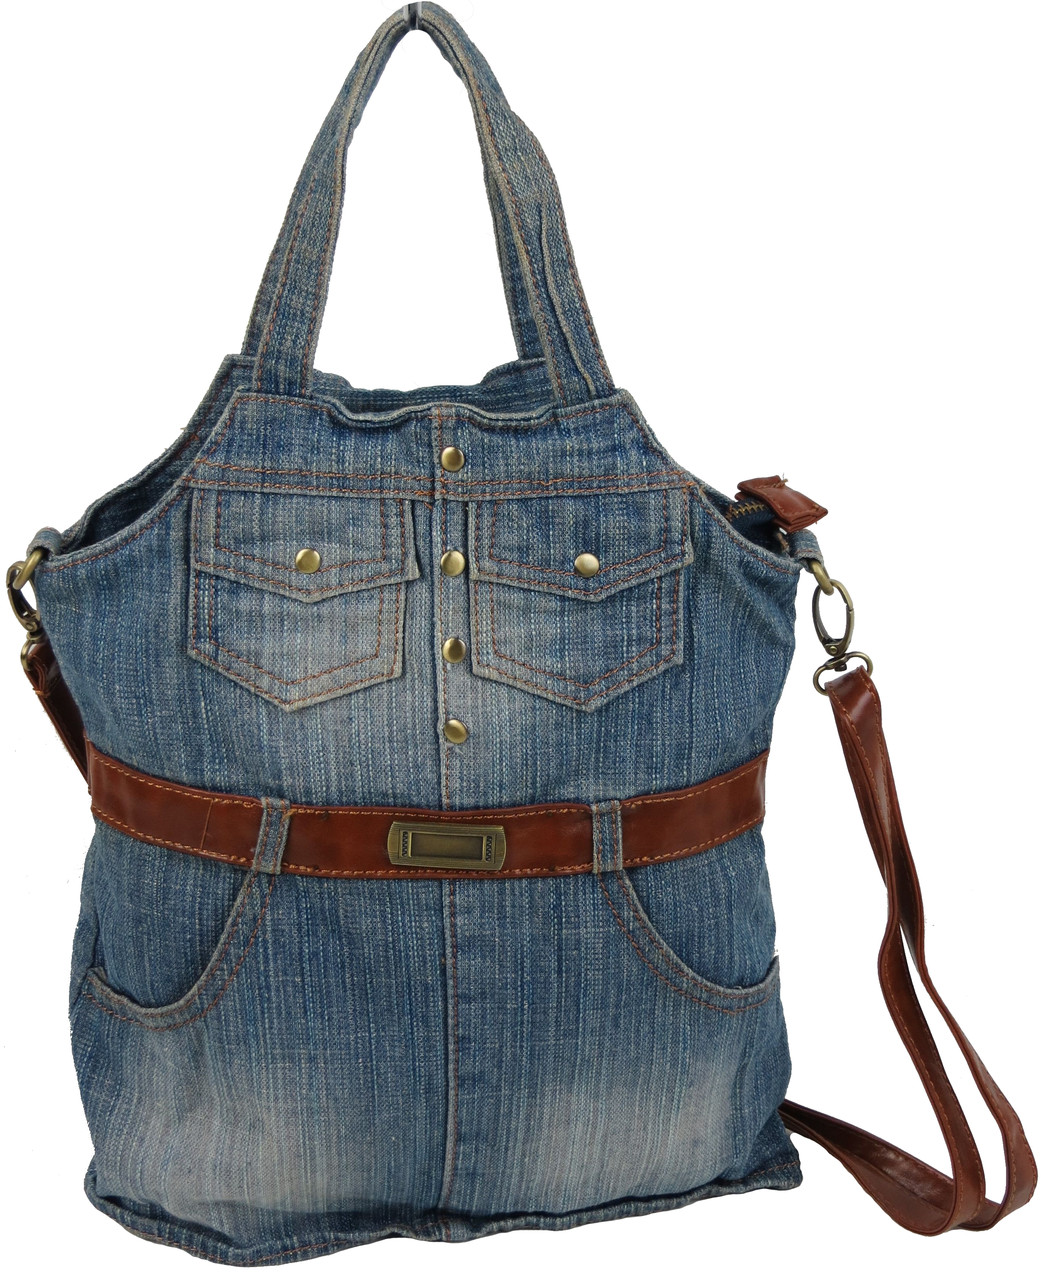 Жіноча джинсова сумка Fashion jeans bag синя